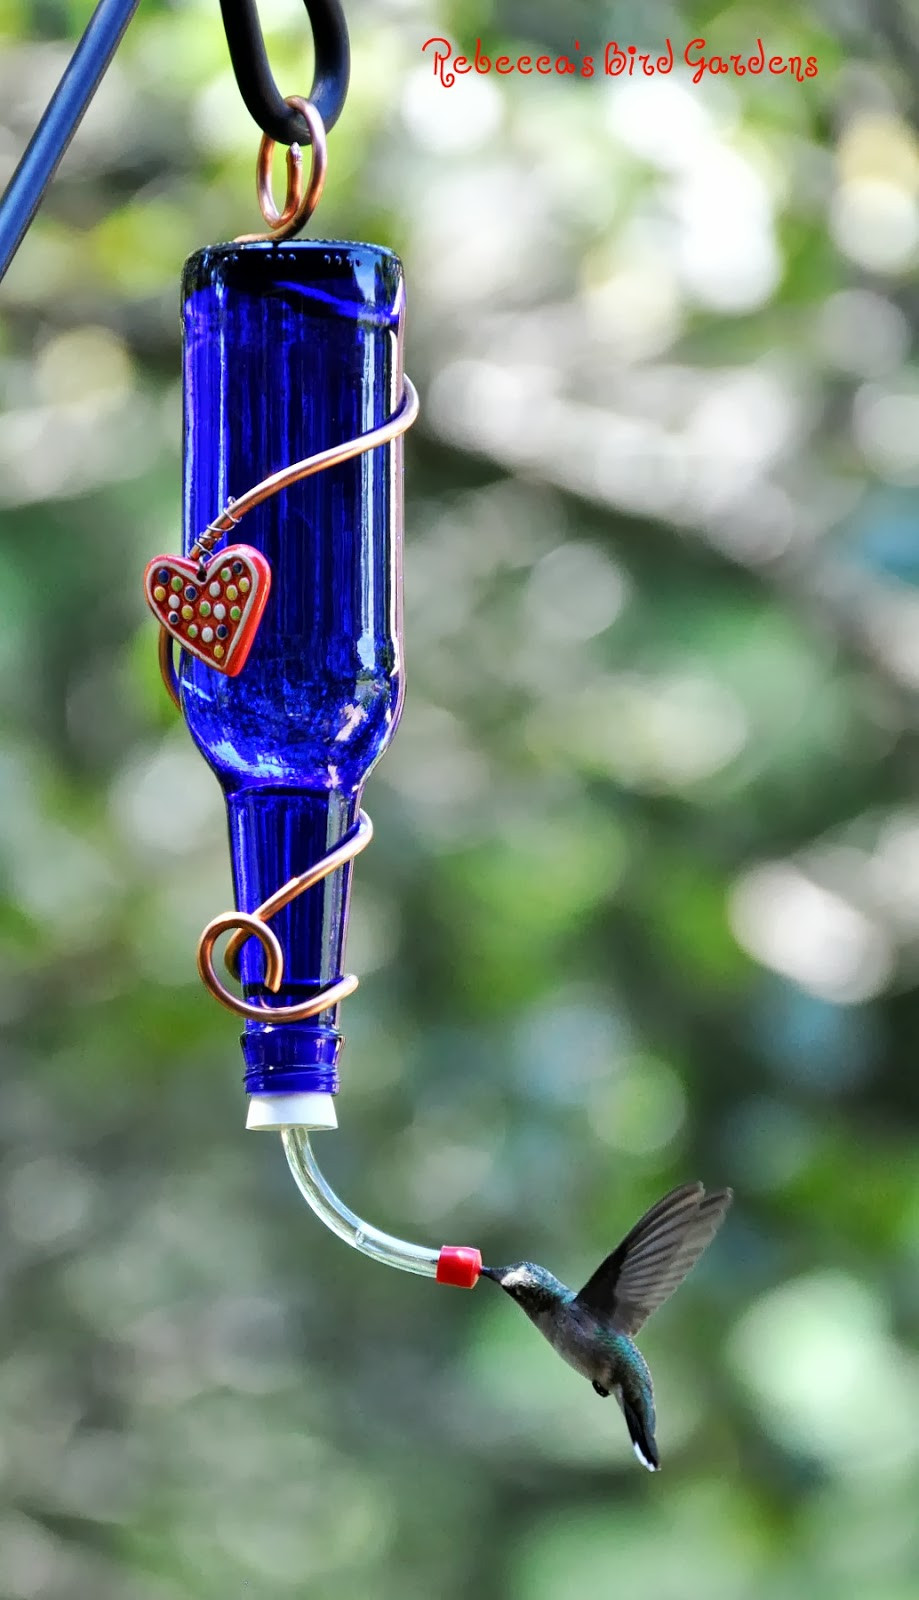 Best ideas about DIY Bird Feeders
. Save or Pin Rebecca s Bird Gardens Blog DIY Fruit and Hummingbird Feeders Now.